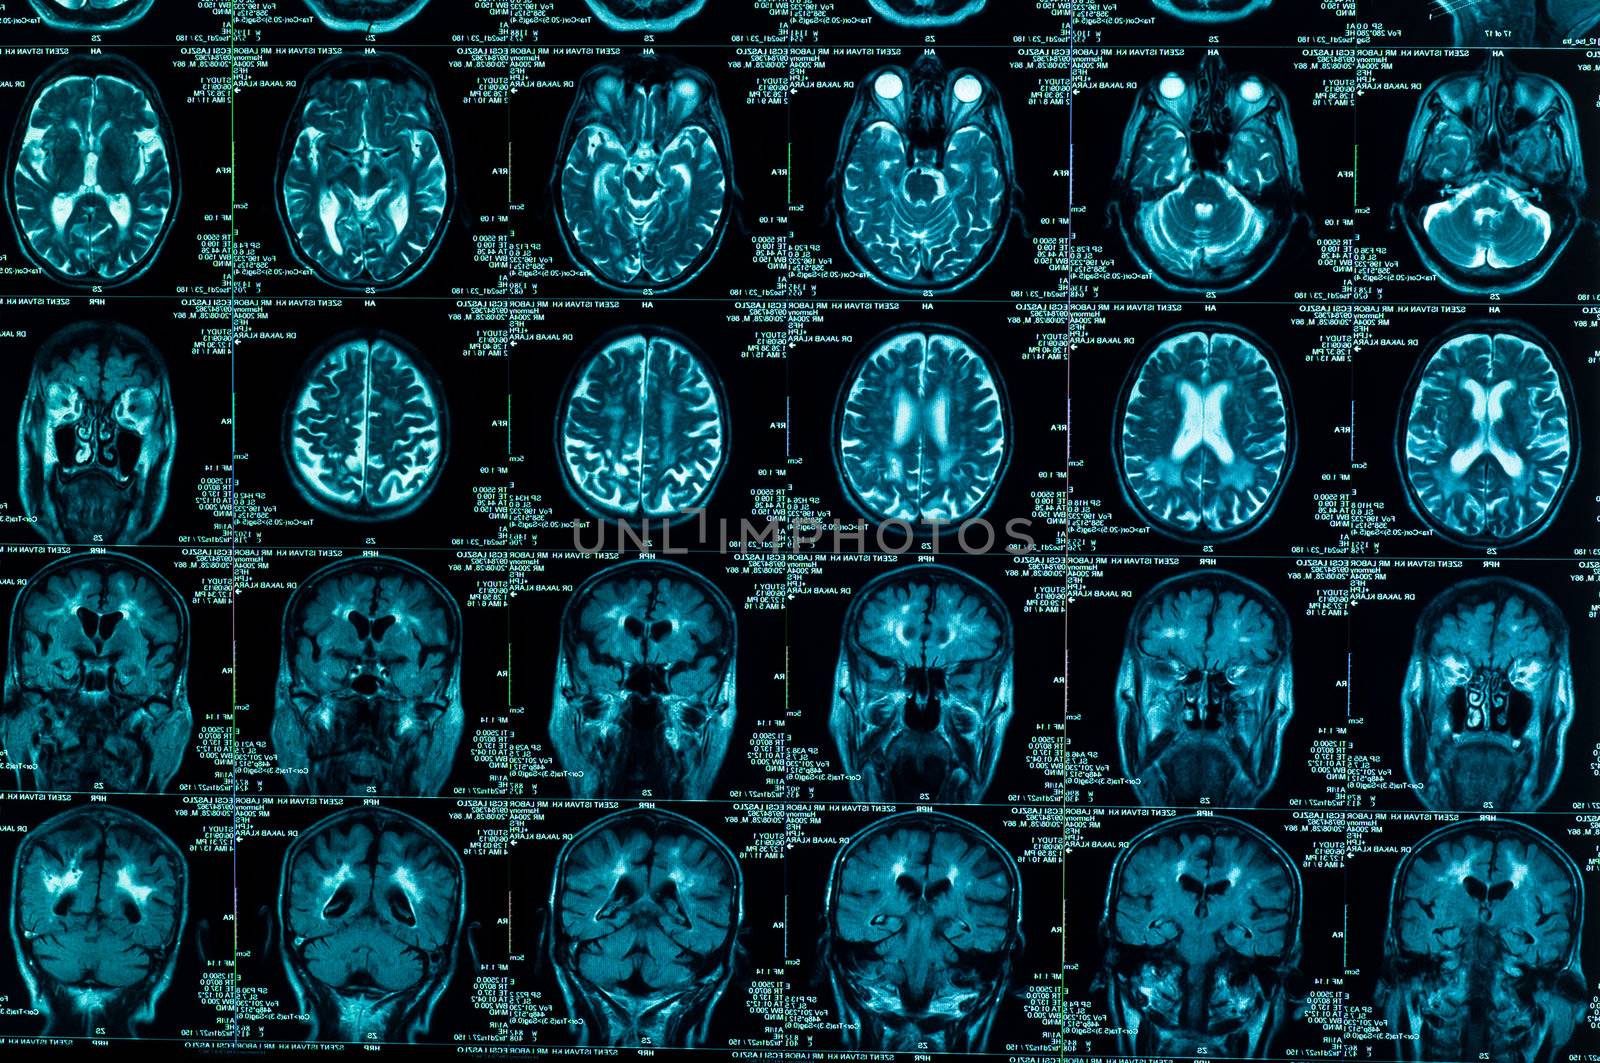 sharp ct scan of the human brain